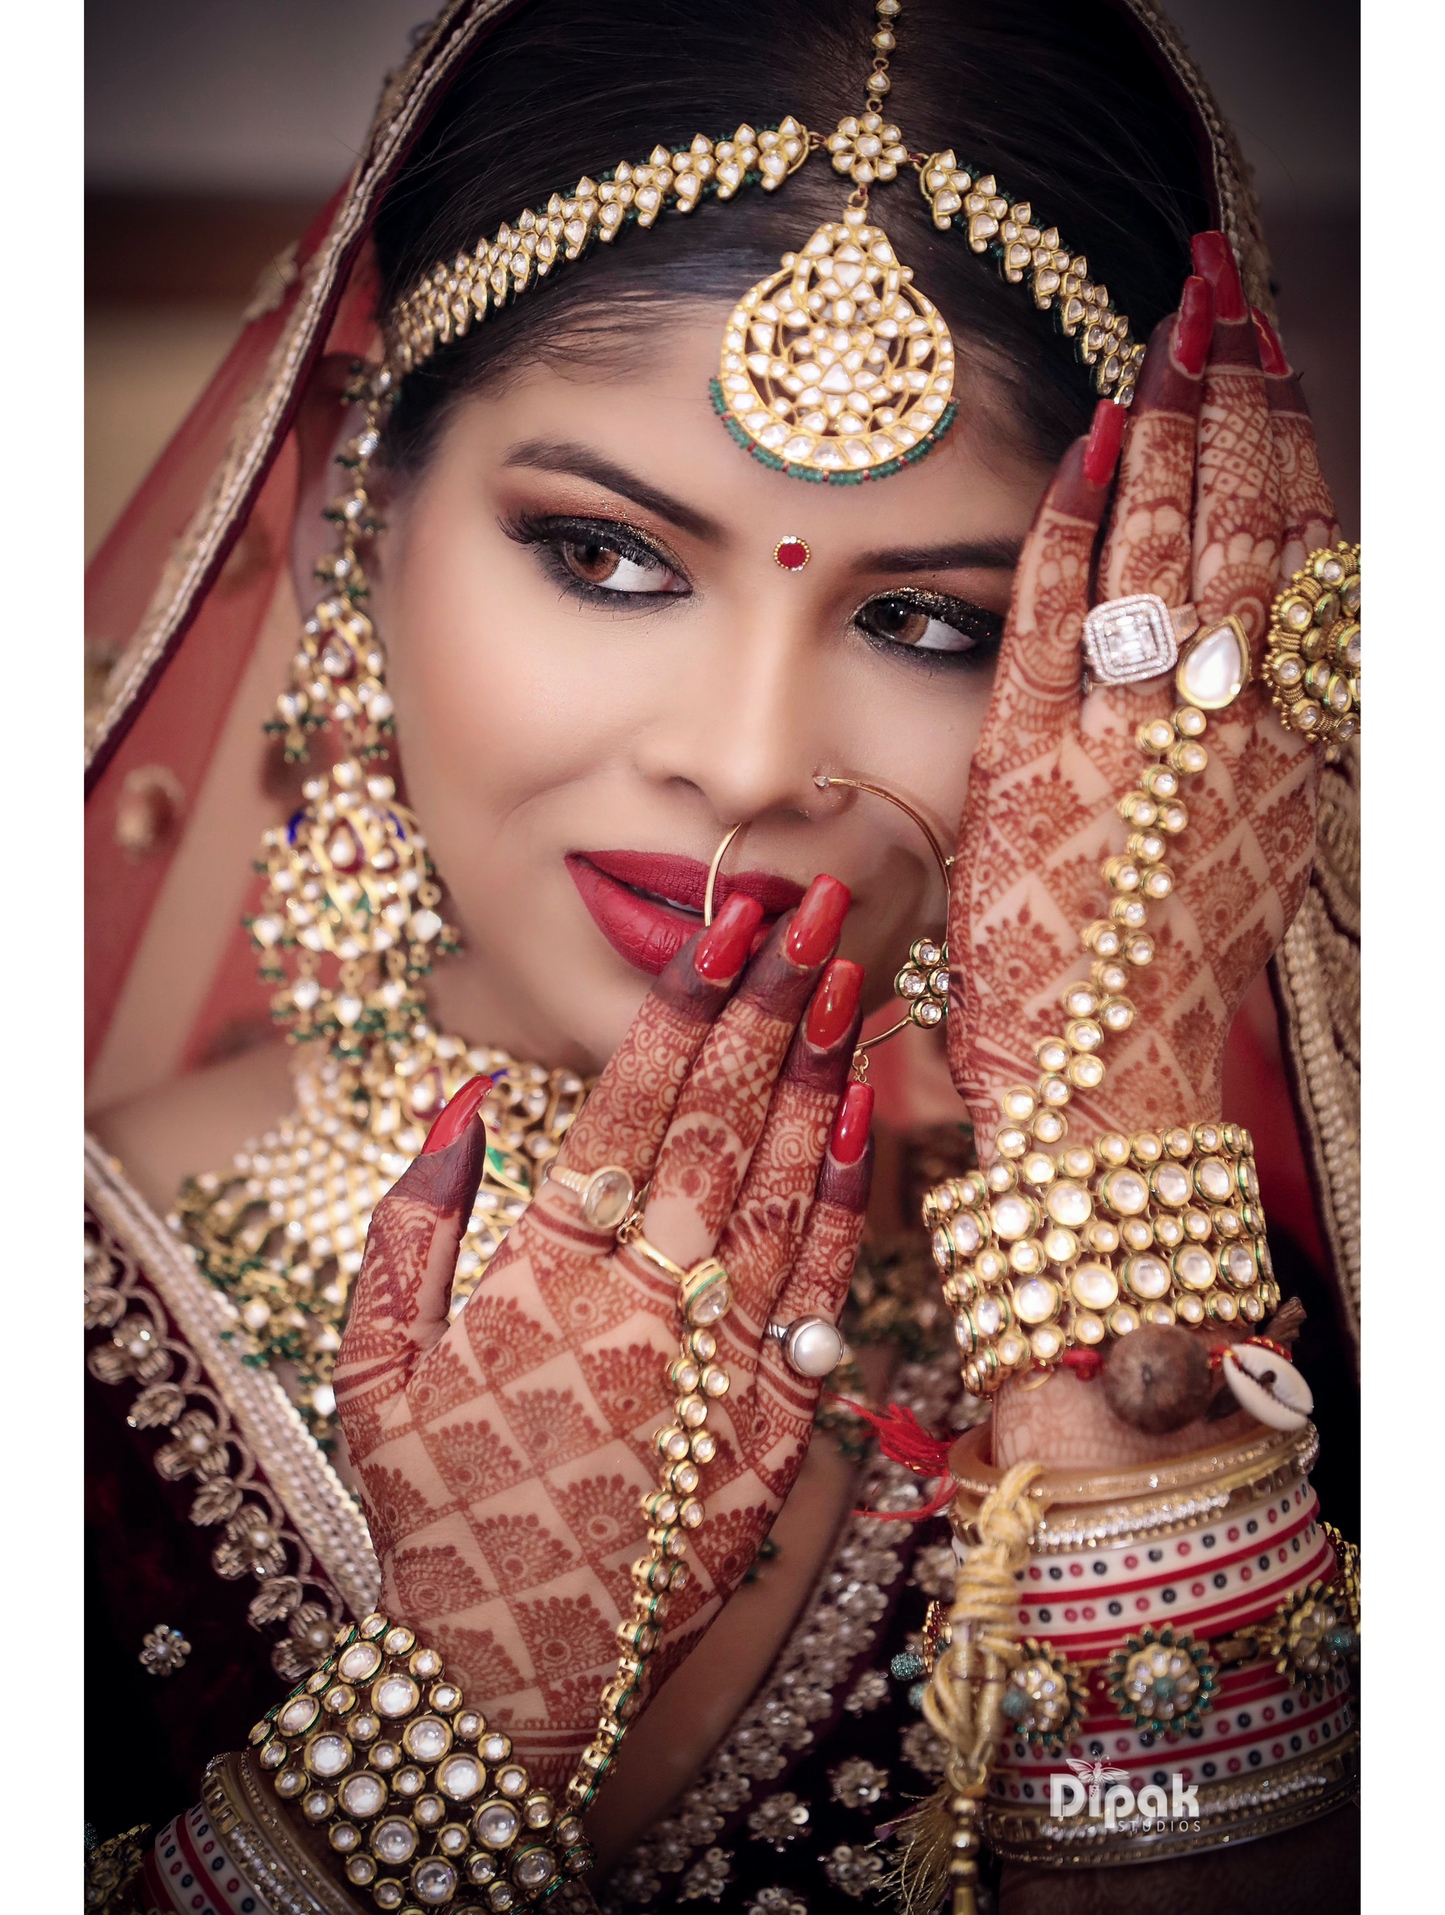 Bride Photographer in Delhi - Dipak Studios